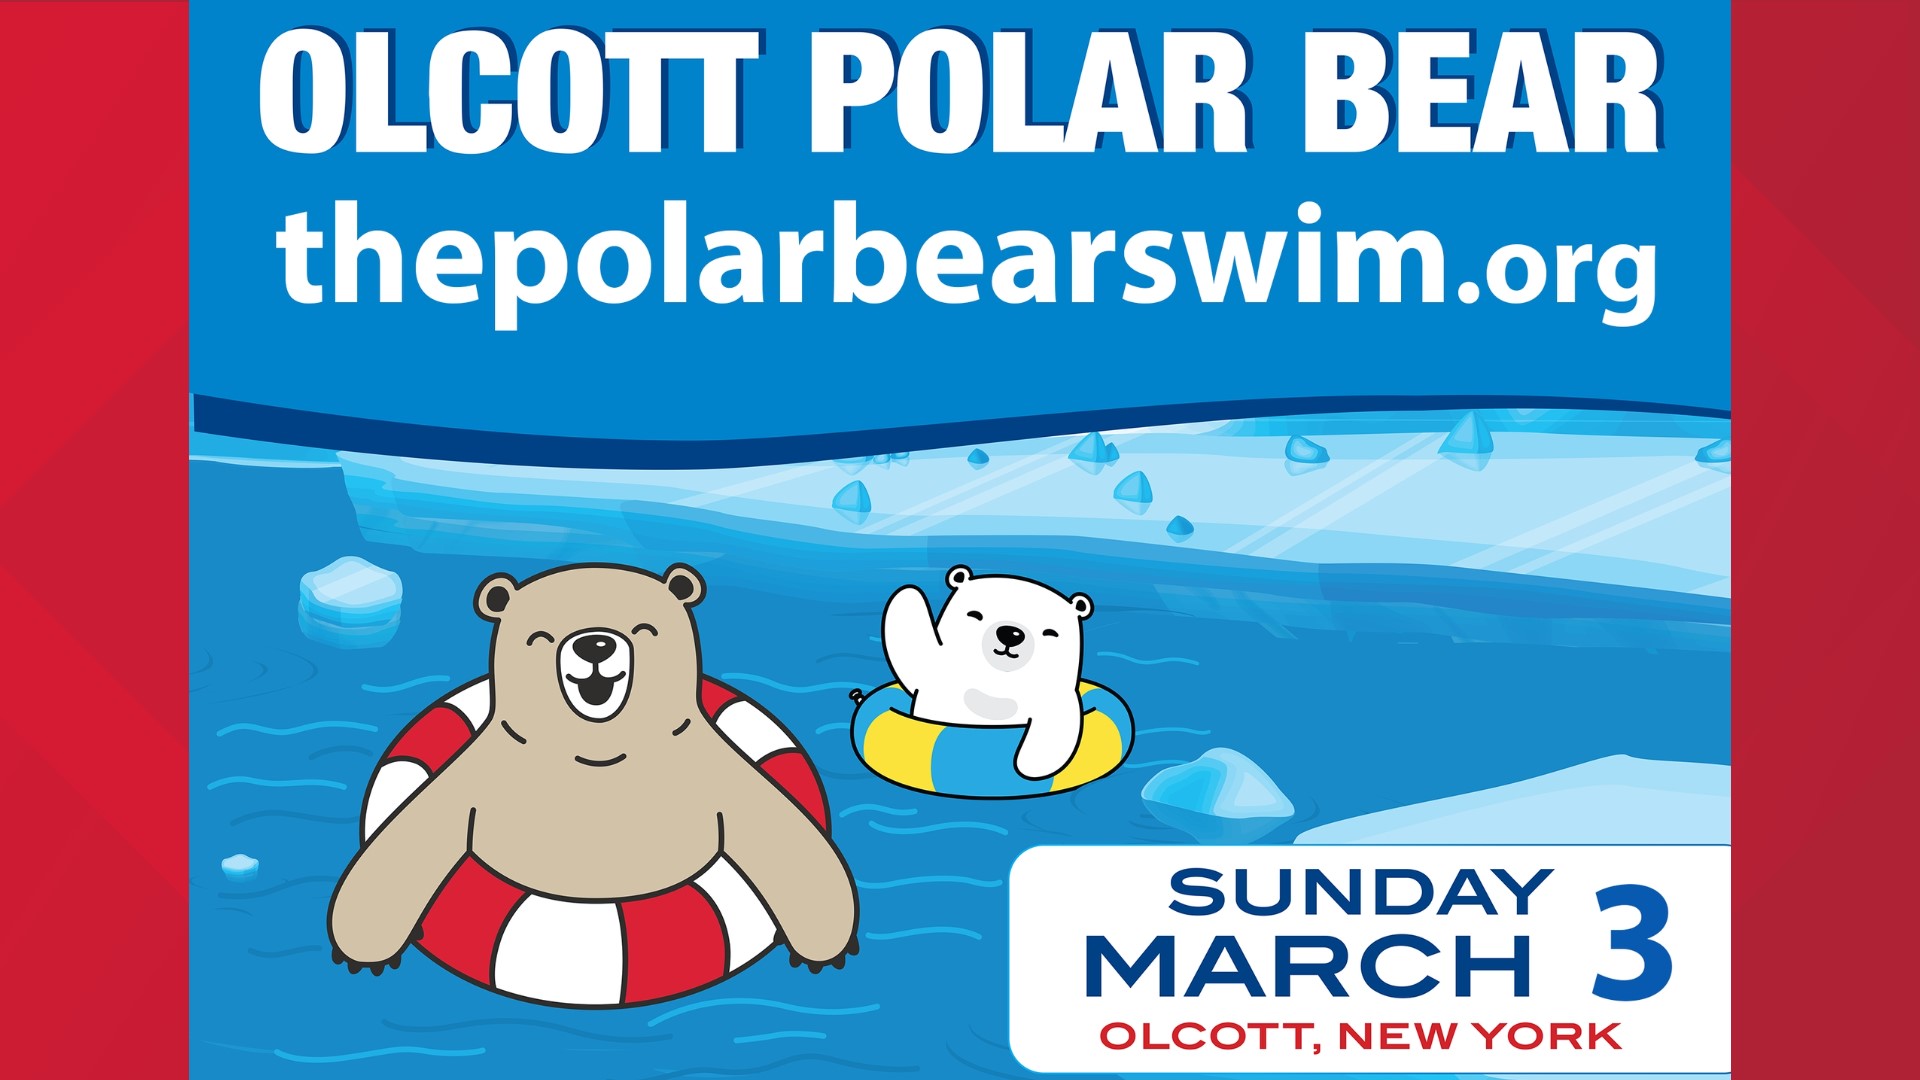 55th annual Polar Bear Swim in Olcott